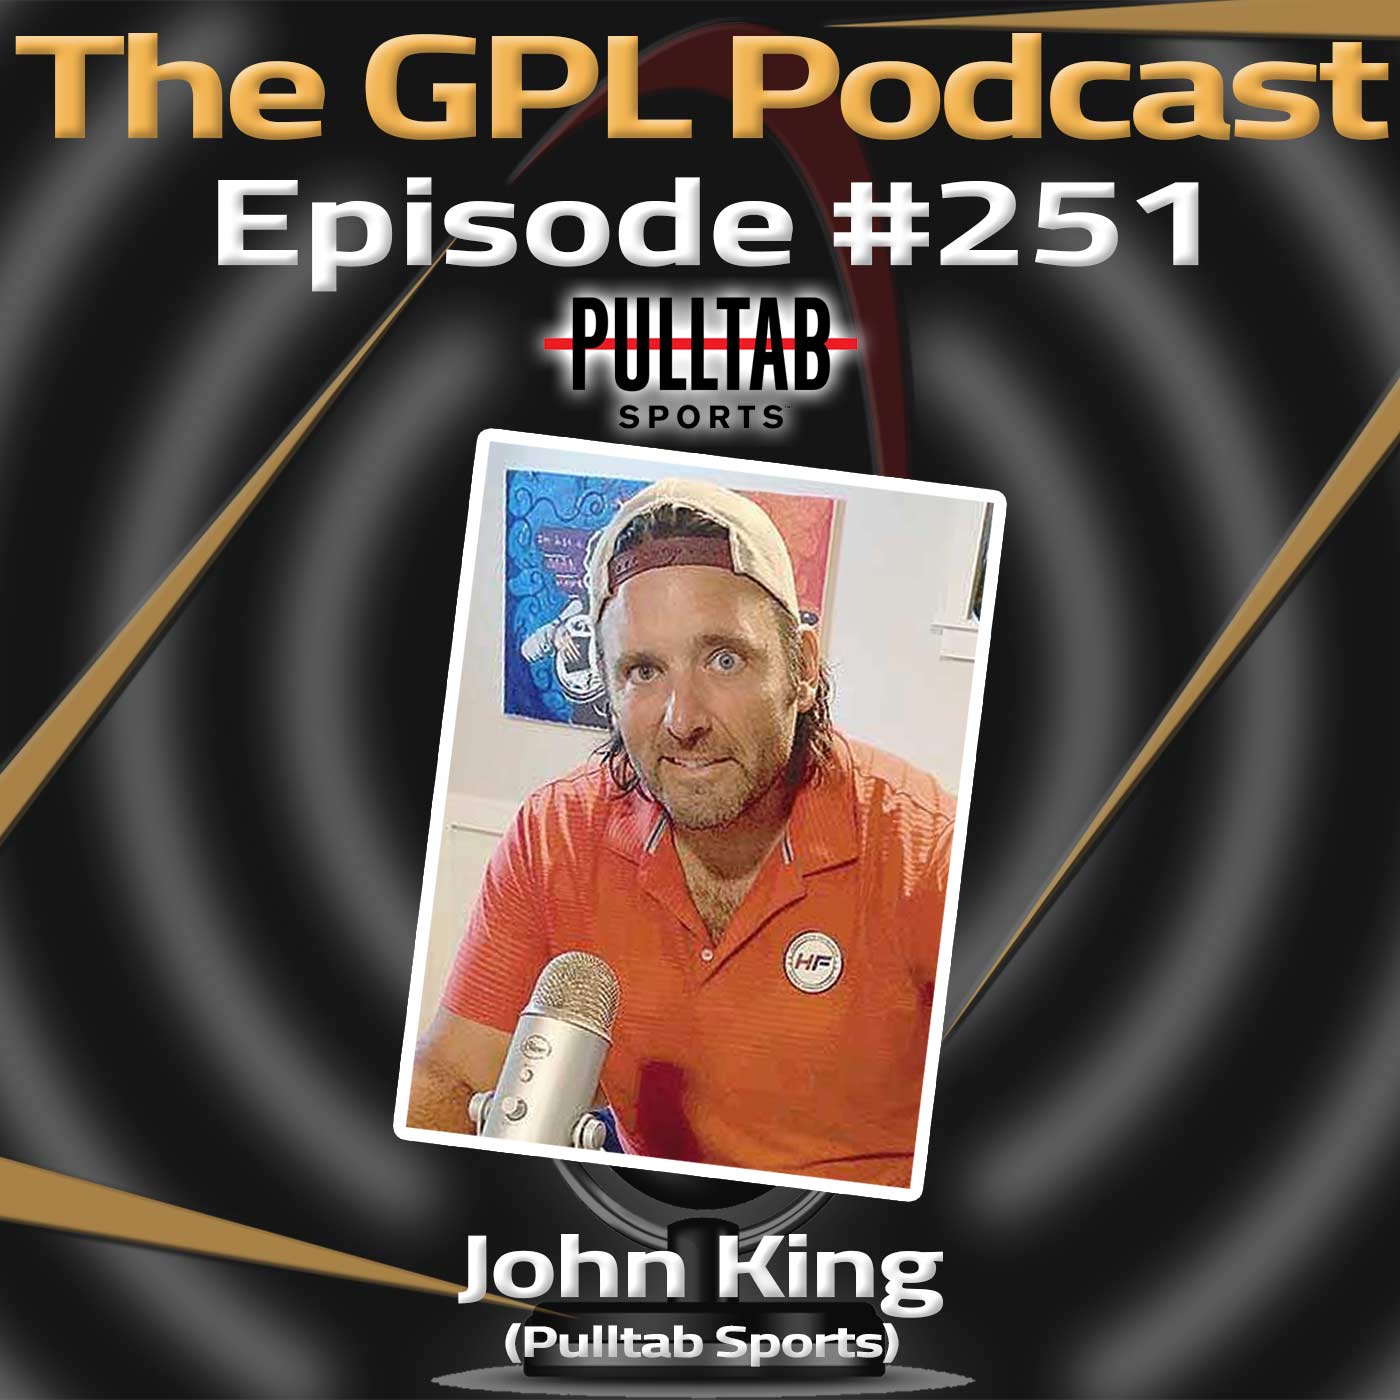 GPL Podcast #251: John King from Pulltab Sports